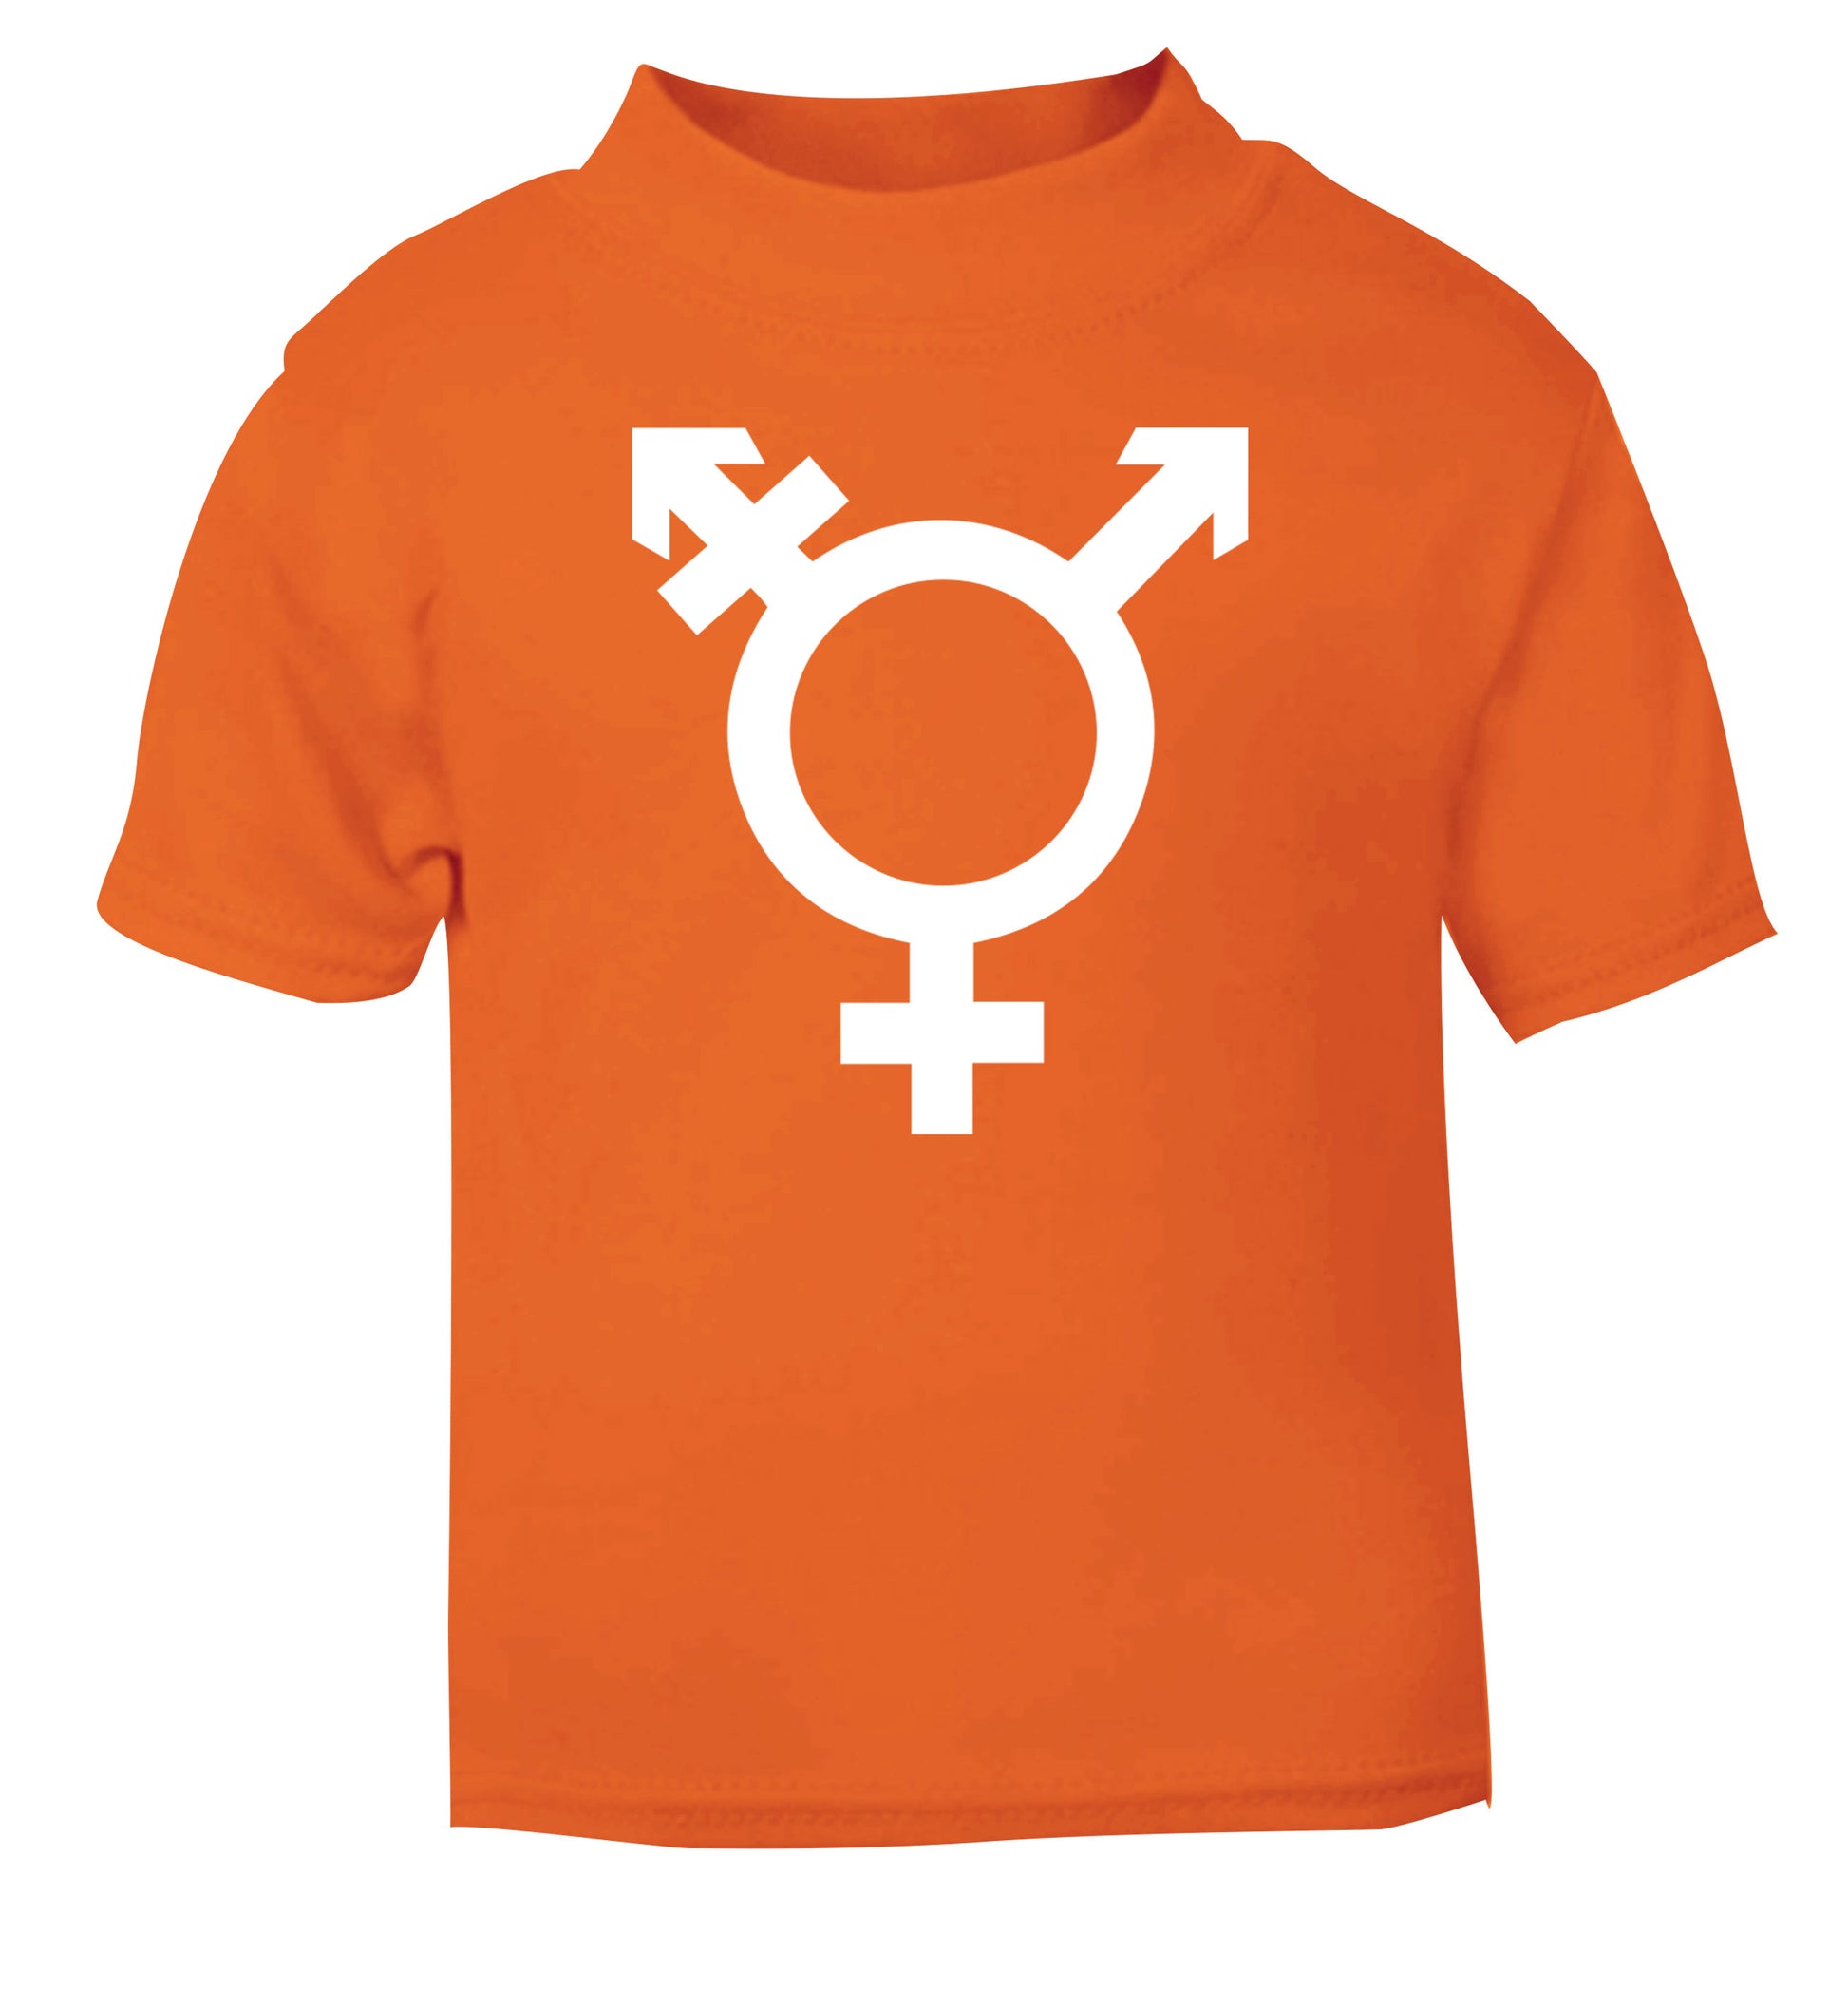 Gender neutral symbol large orange Baby Toddler Tshirt 2 Years